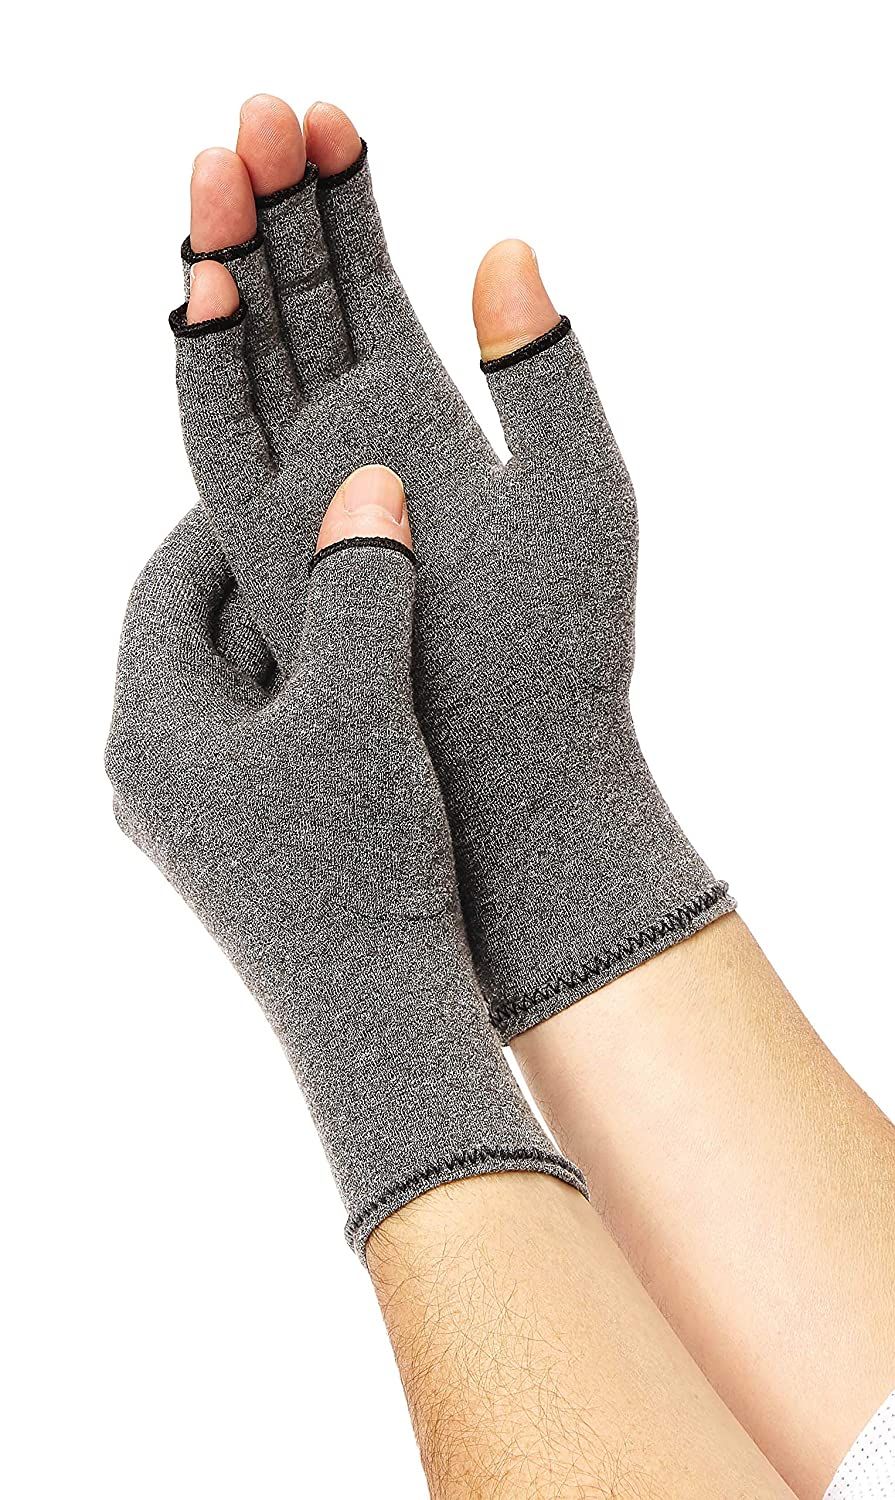 DISCMedline Arthritis Relief Gloves